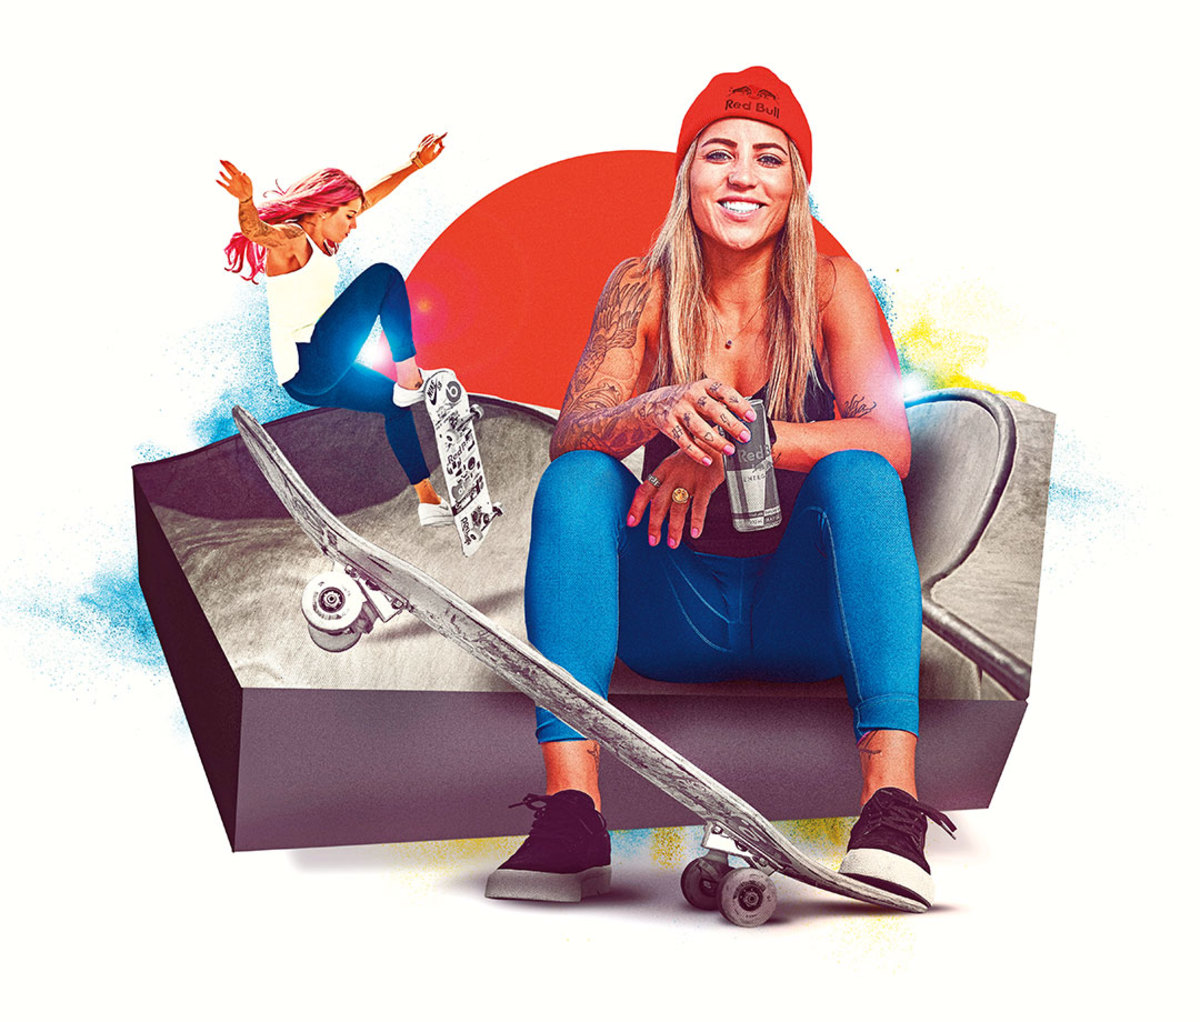 Skateboarder Leticia Bufoni, 5x X-Games Gold Medalist